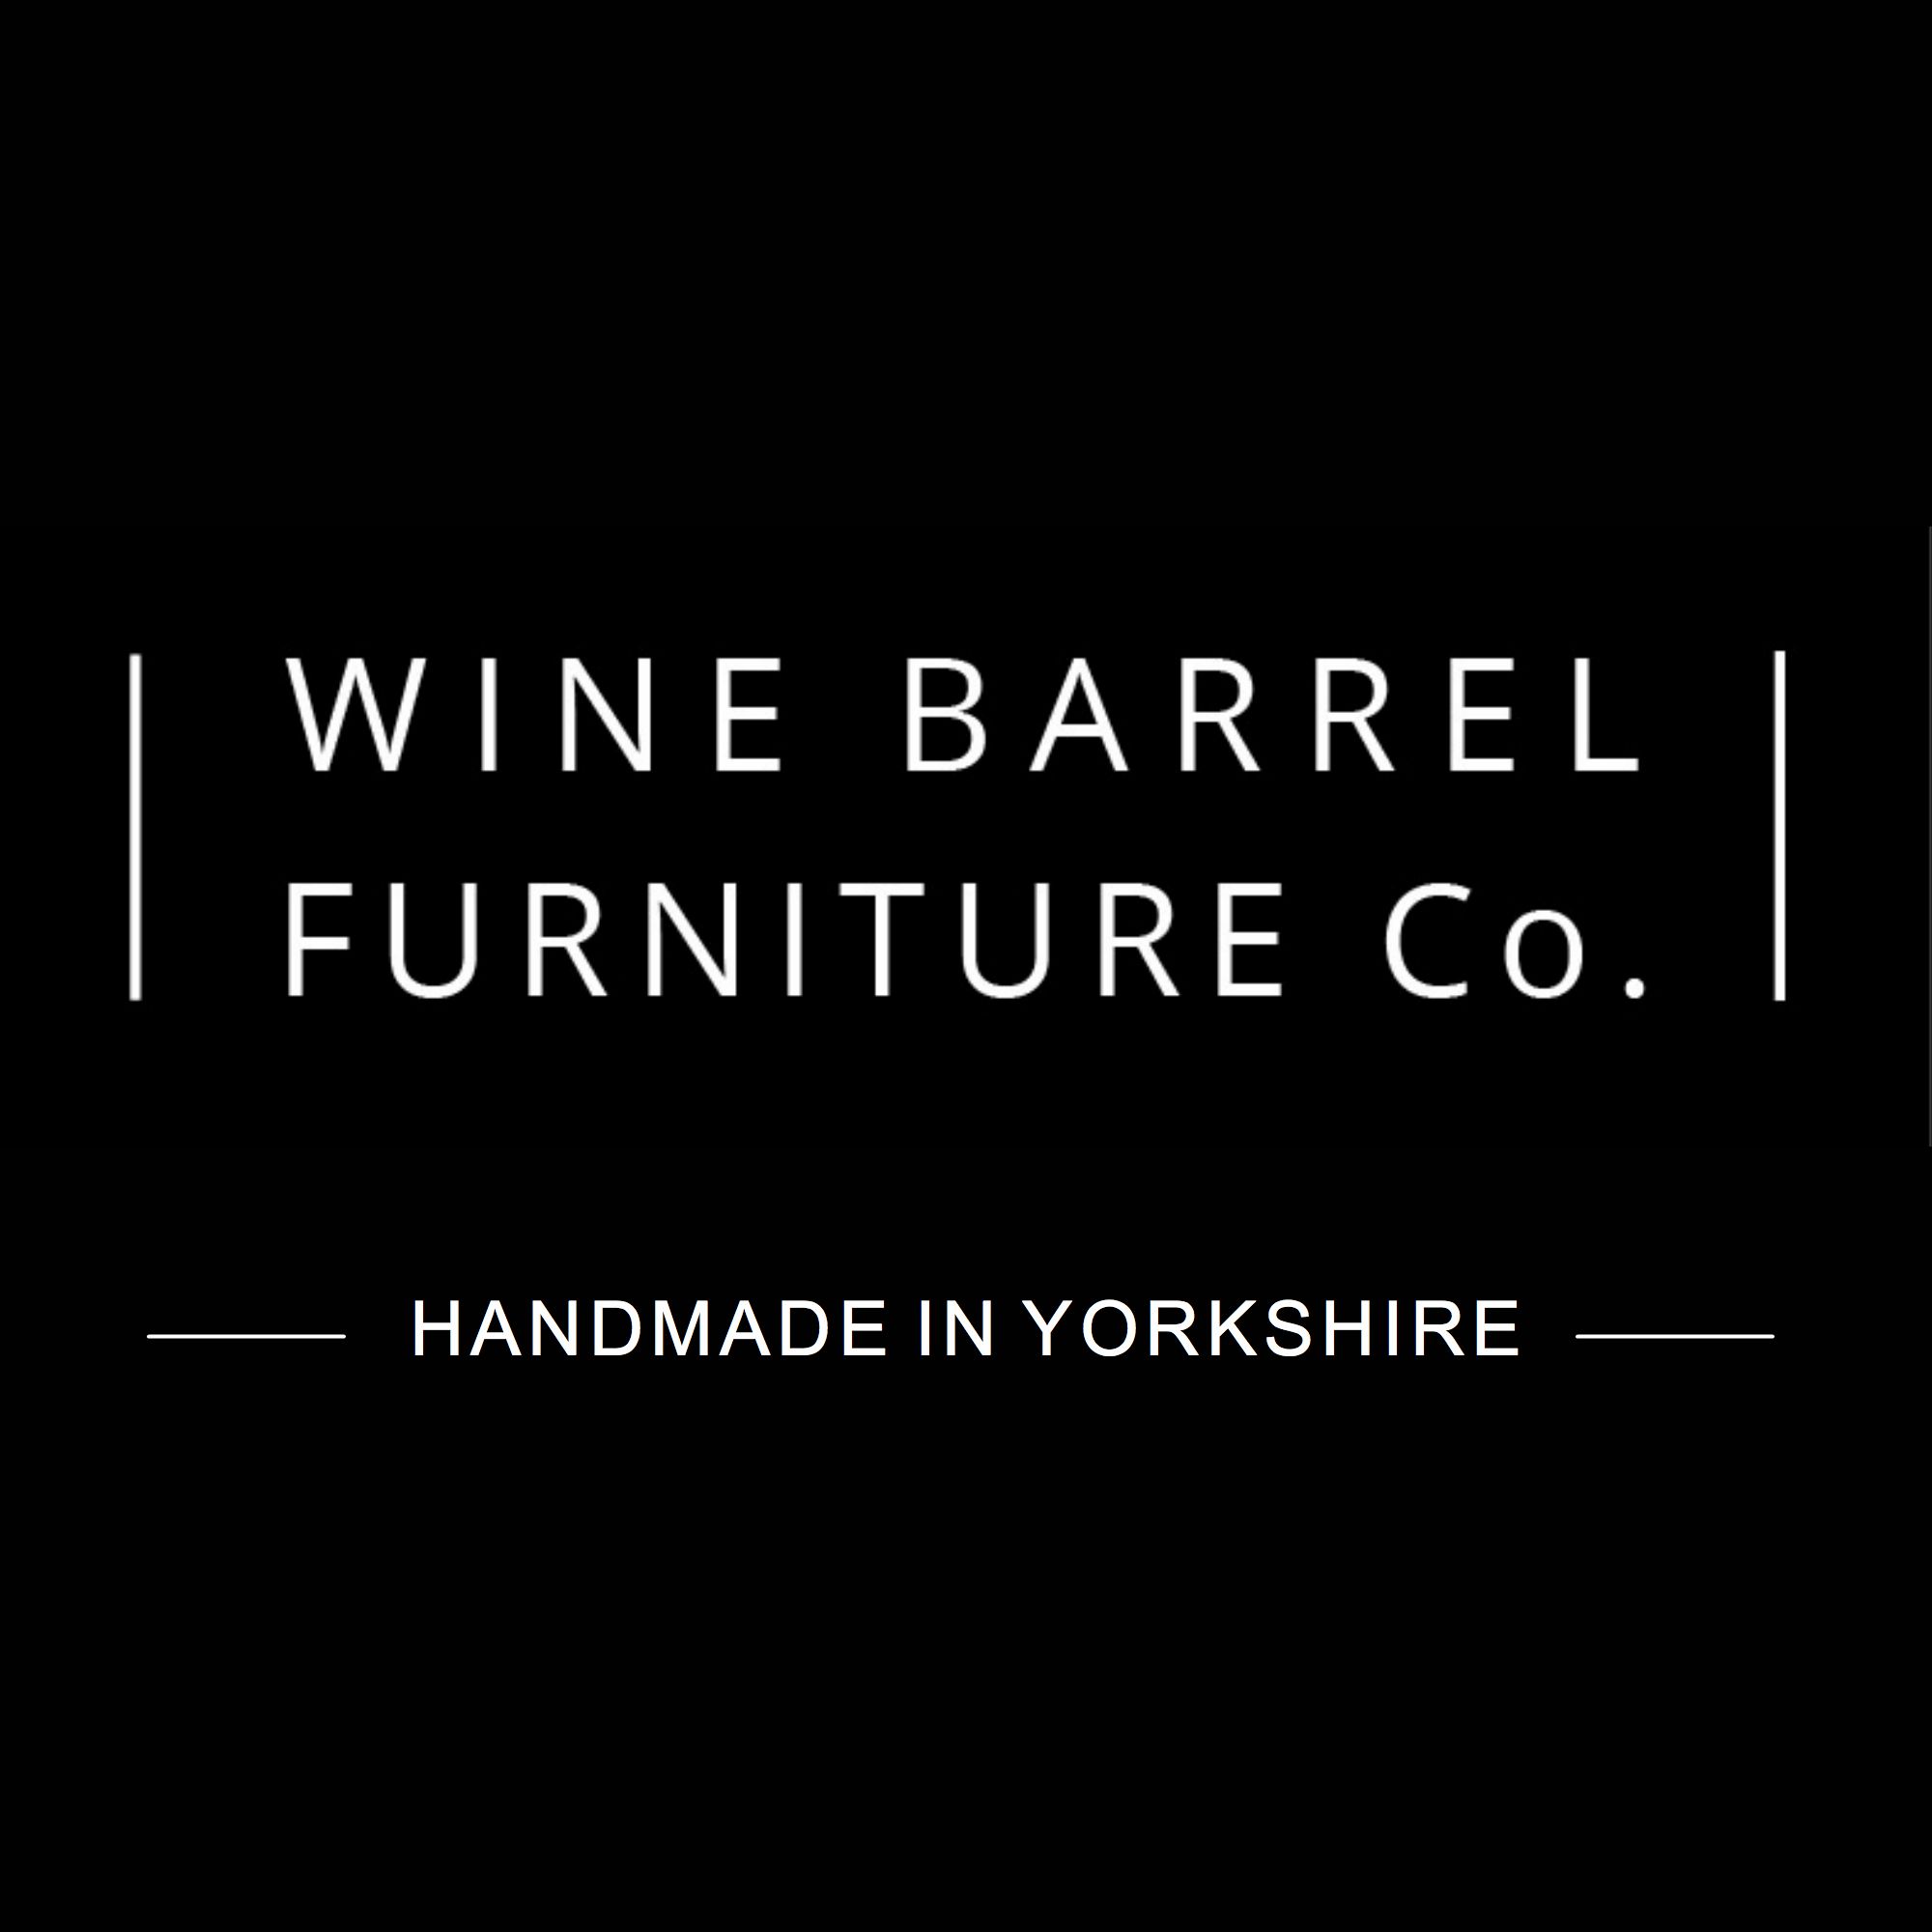 The Wine Barrel Furniture Company